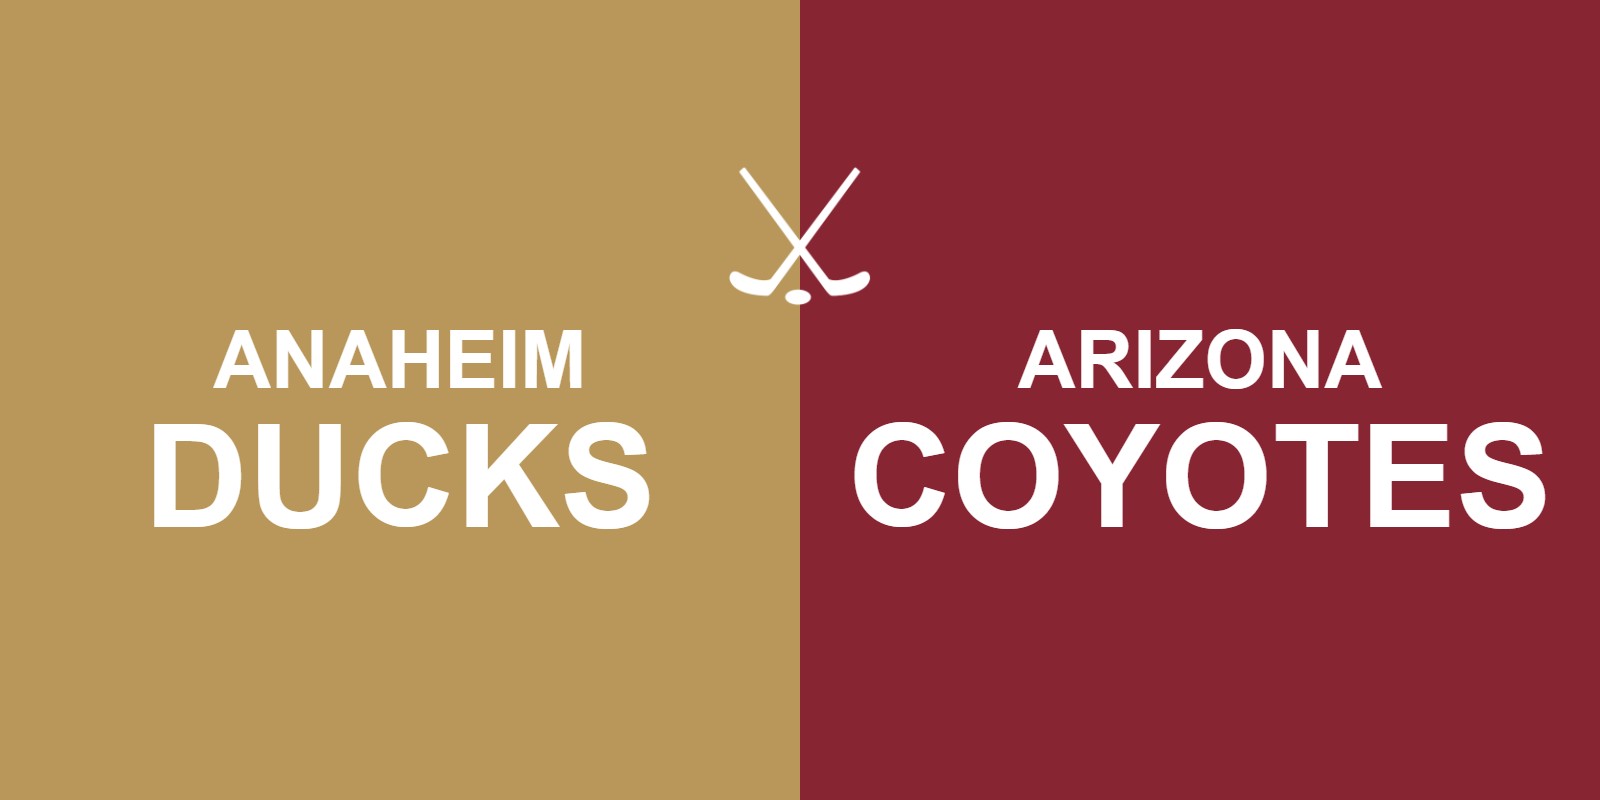 Ducks vs Coyotes